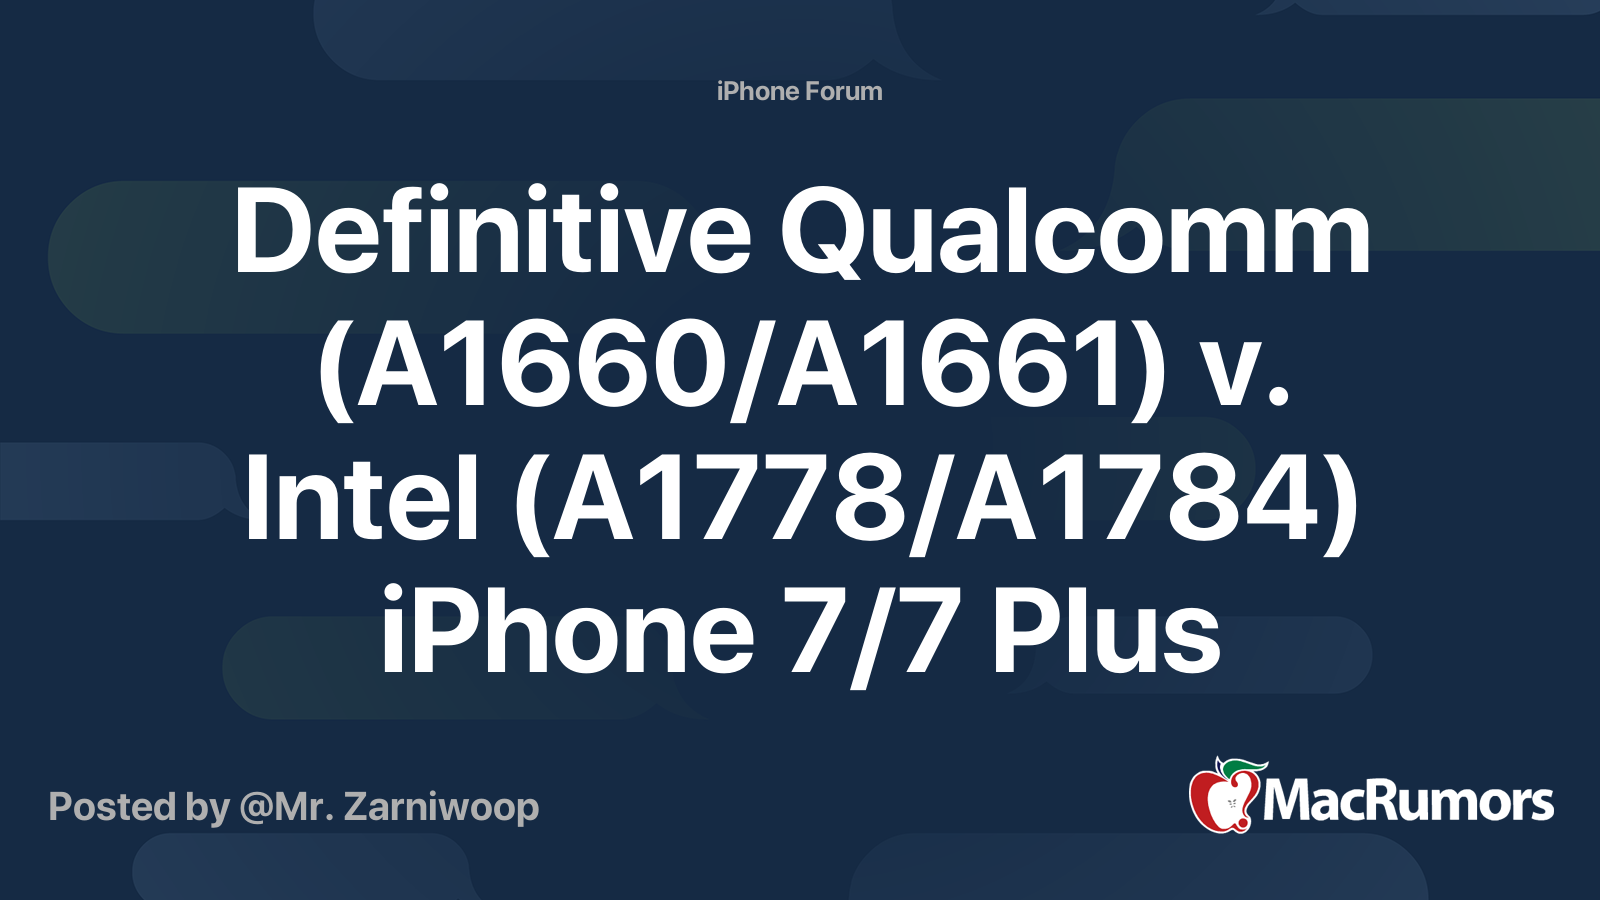 Definitive Qualcomm A1660 A1661 V Intel A1778 A1784 Iphone 7 7 Plus Thread Macrumors Forums